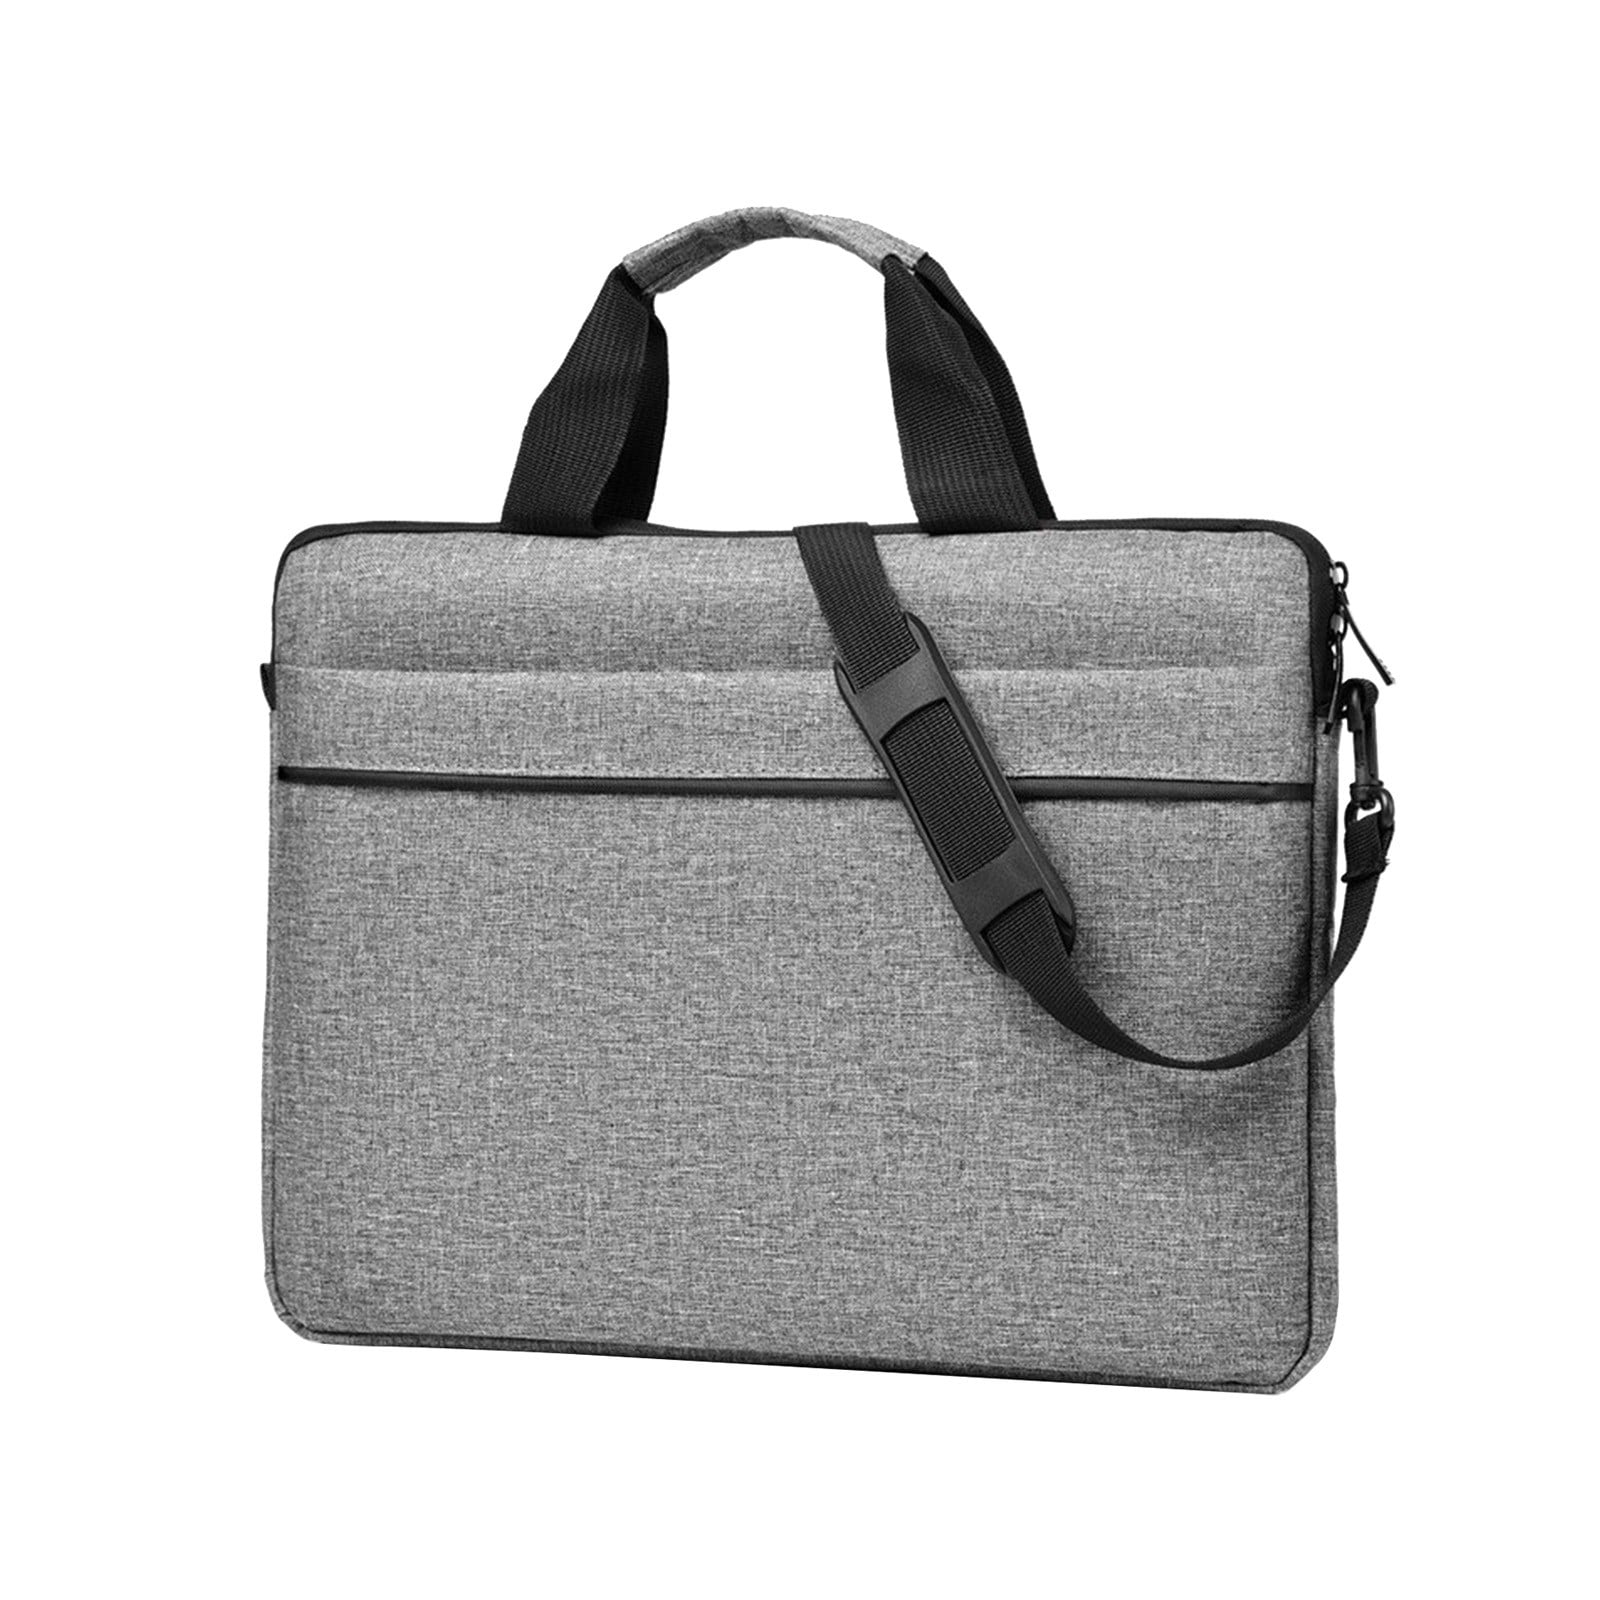 YUVA TRENDZY - LOUIS VUITTON Laptop/office bag (great quality) (size  16/12”) DM FOR PRICE #laptopbag #laptopcase #laptop #taslaptop  #laptopsleeve #leatherbag #netbookcase #netbooksleeve #laptopcover #bags  #jualtaslaptop #macbook #totebag #bag